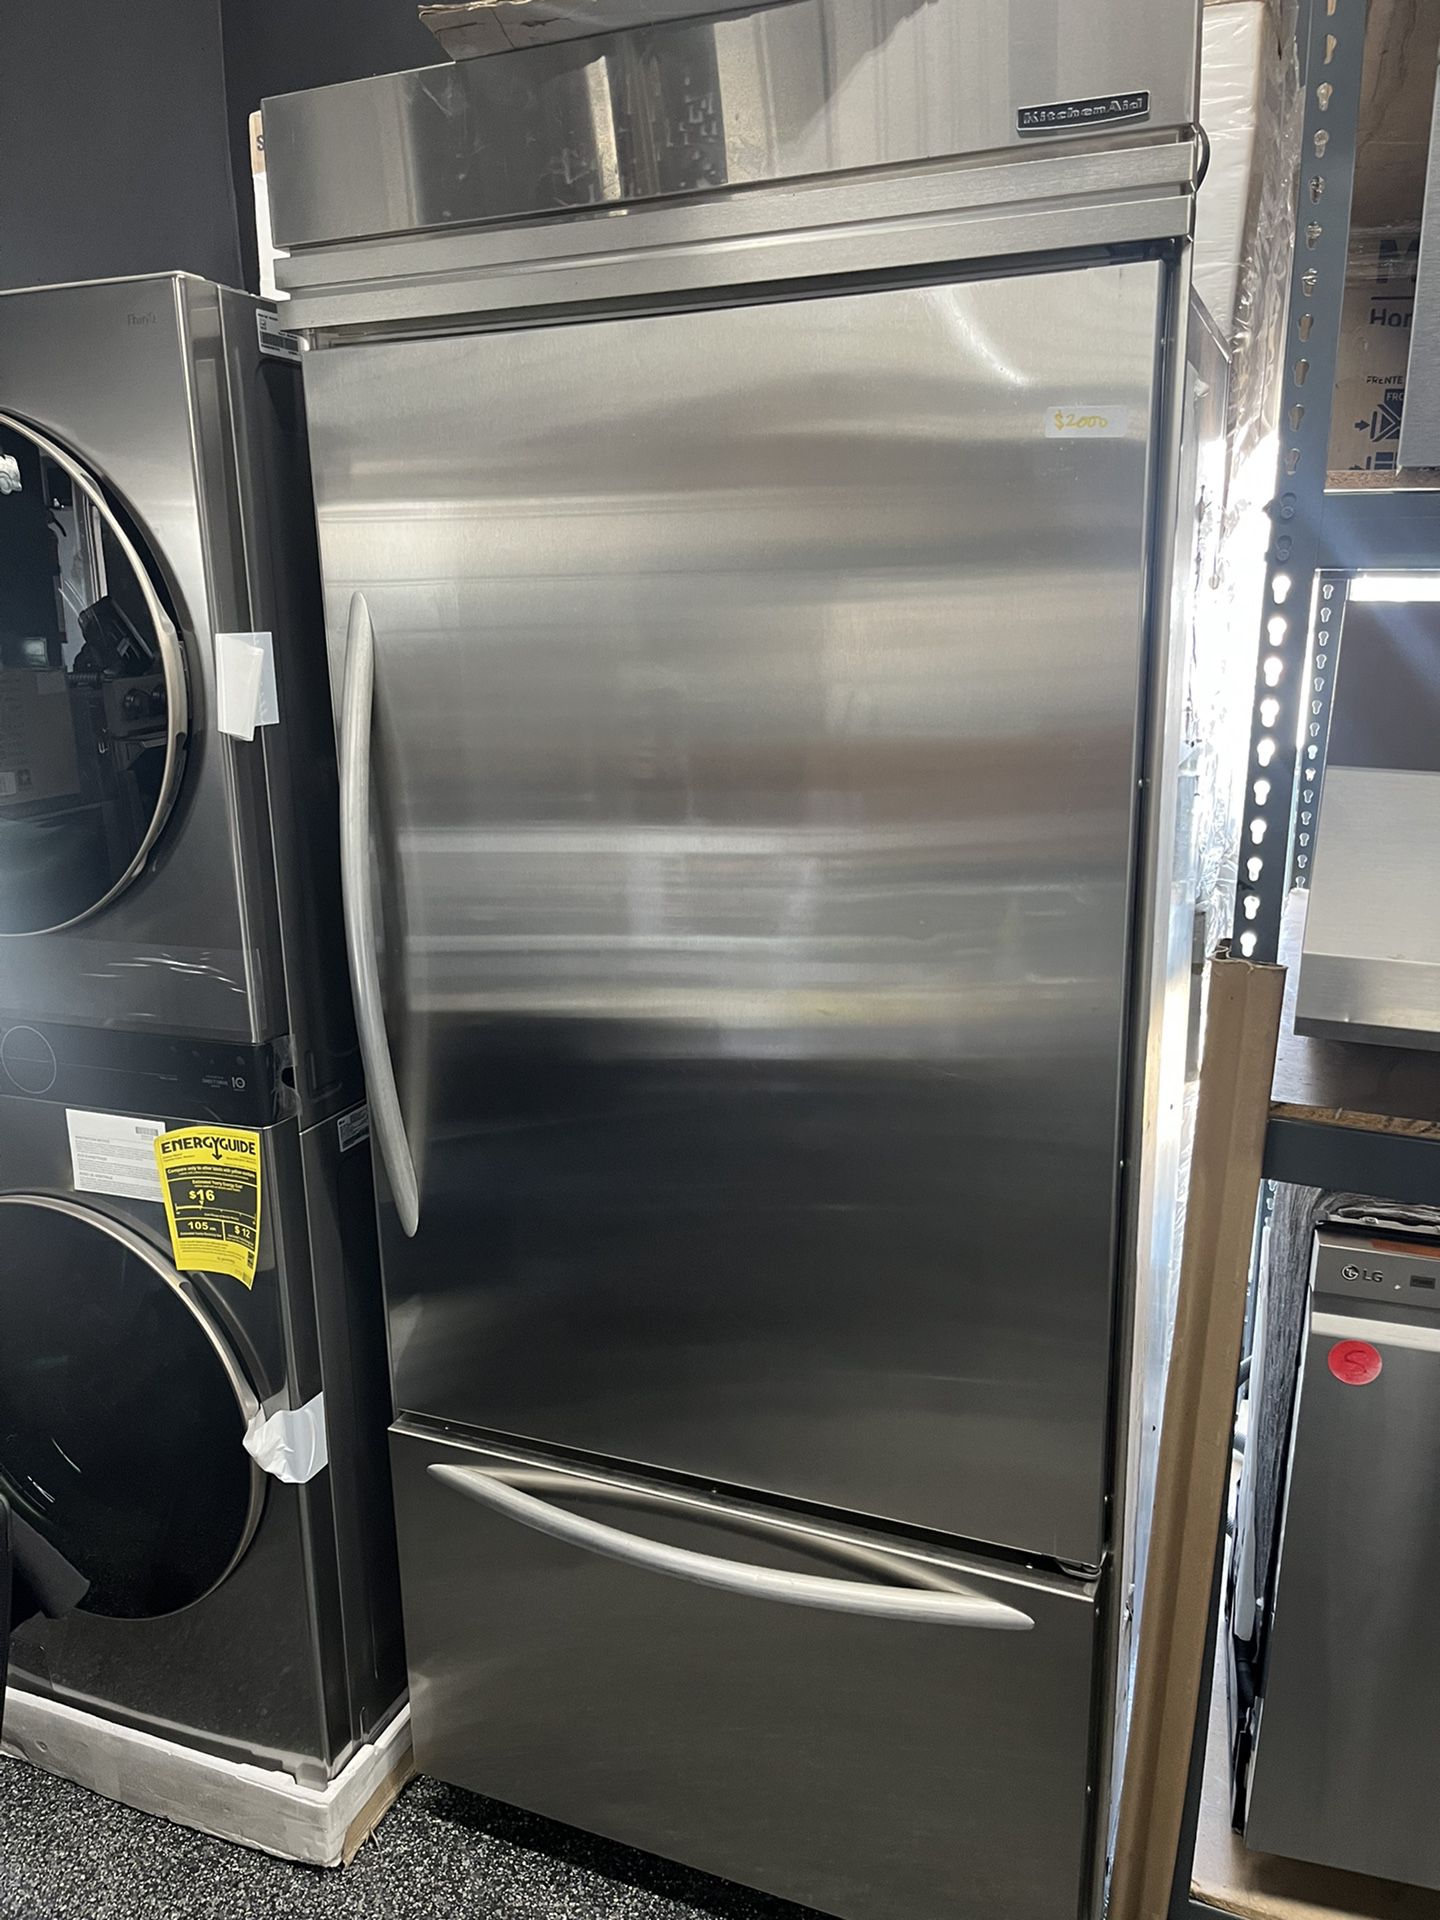 Built In Kitchen Aid Bottom Freezer 36” Fridge Stainless Steel